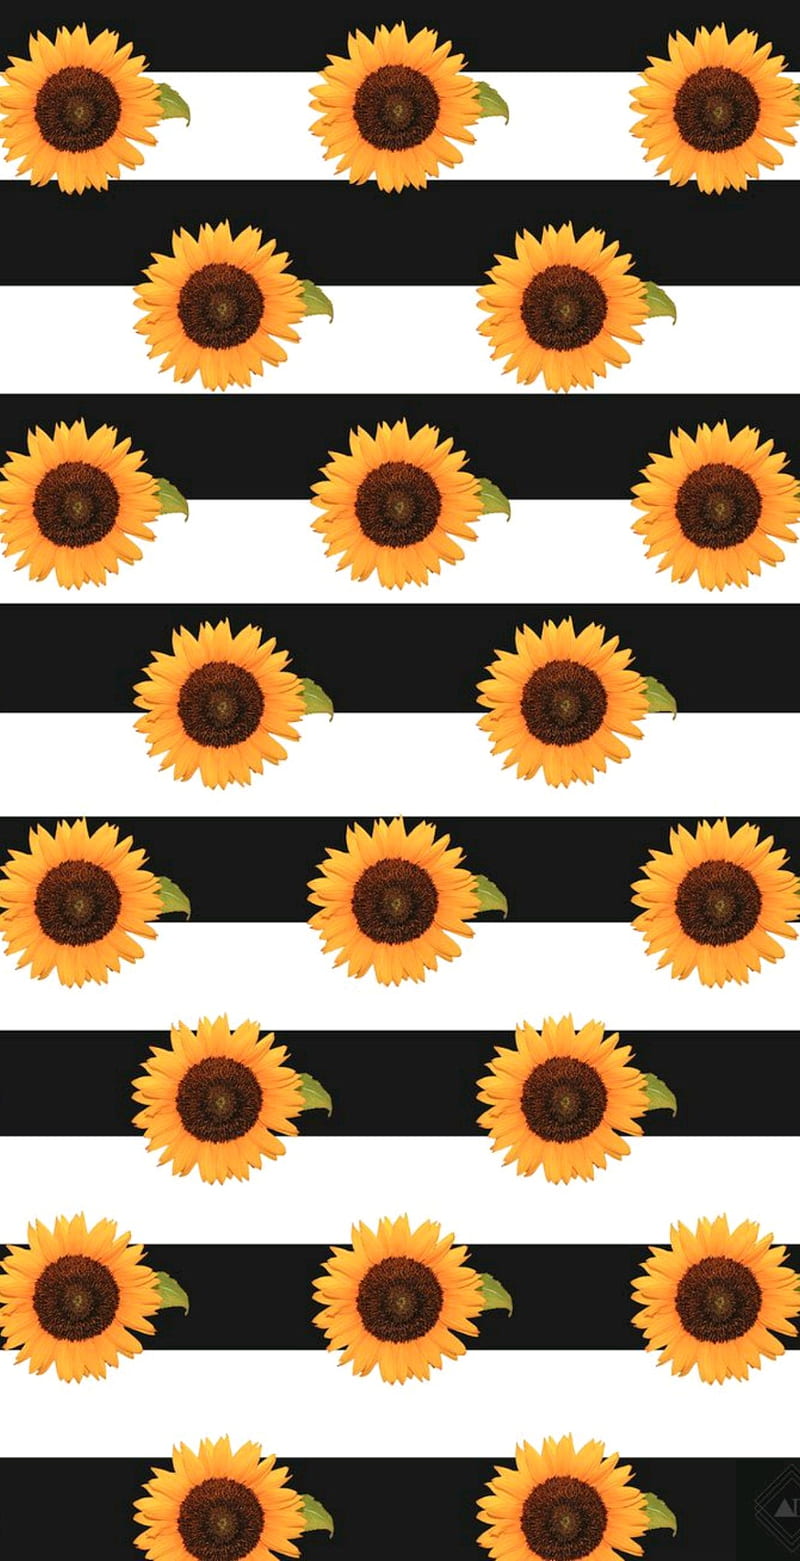 Sunflower Black Background Images - Free Download on Freepik